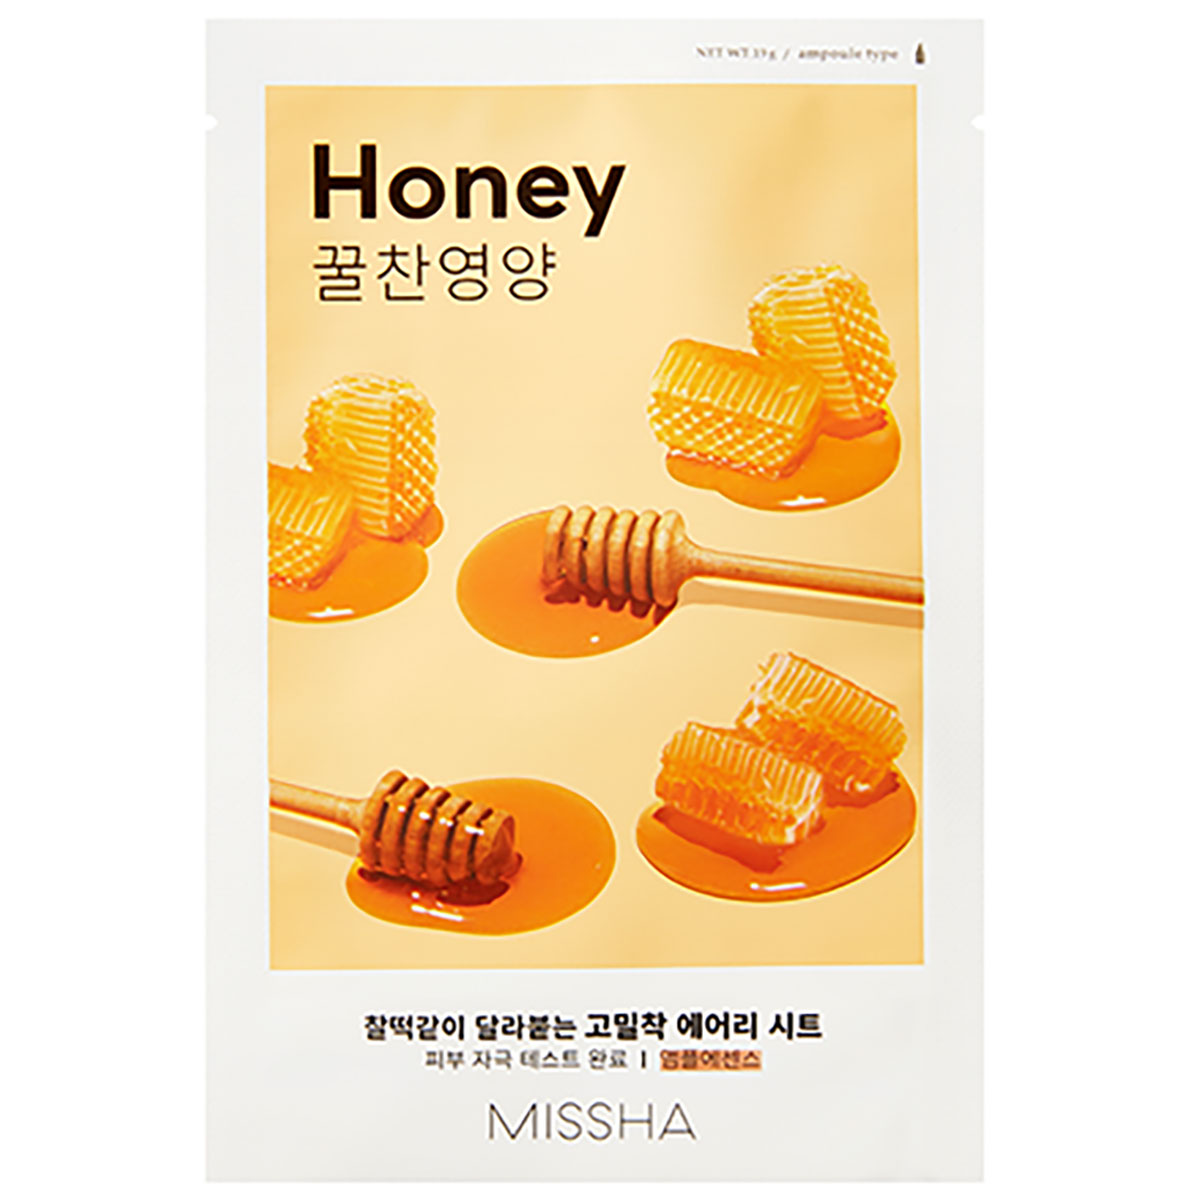 Airy Fit Sheet Mask (Honey), 19 g MISSHA K Beauty Masker